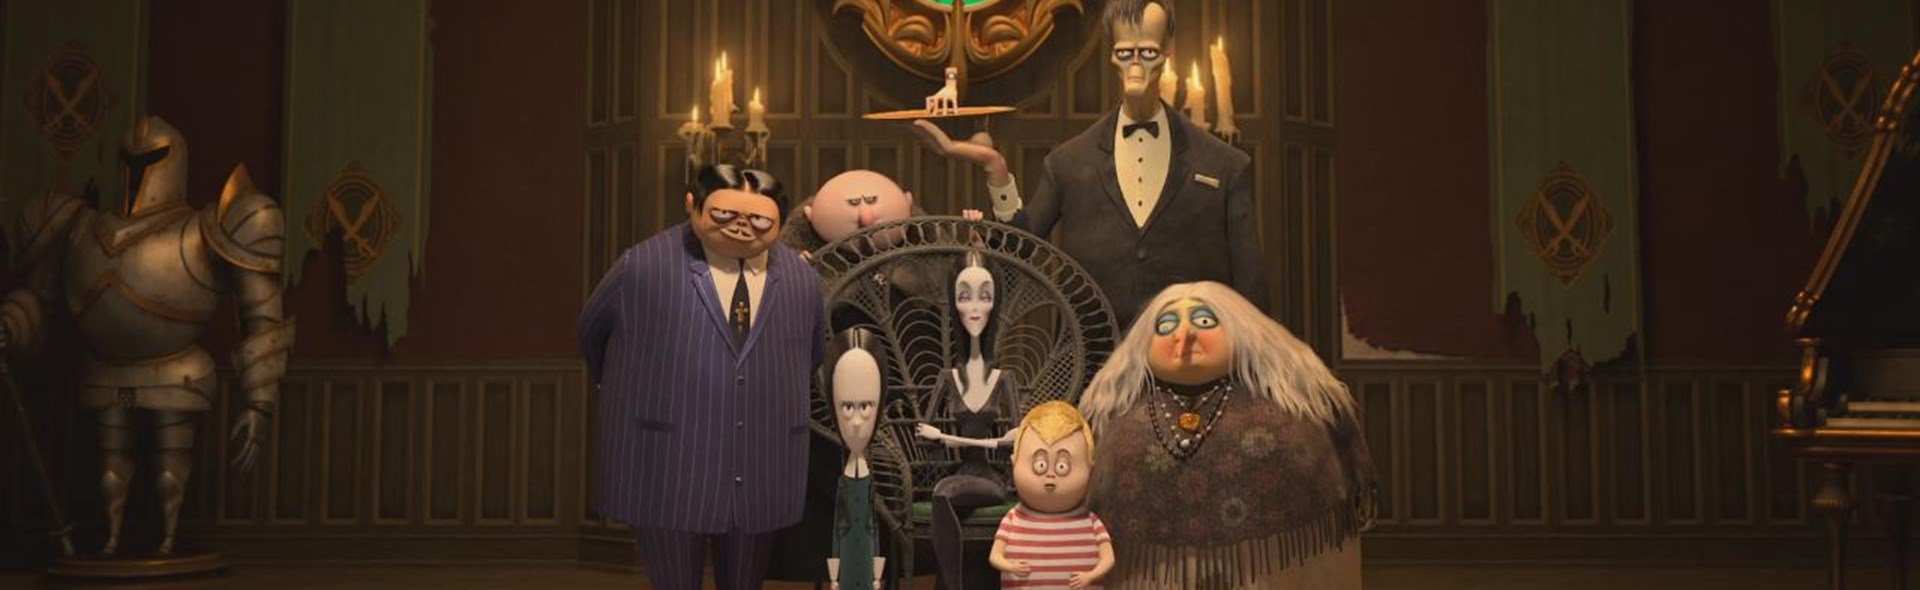 Family Film Fun: The Addams Family (PG)